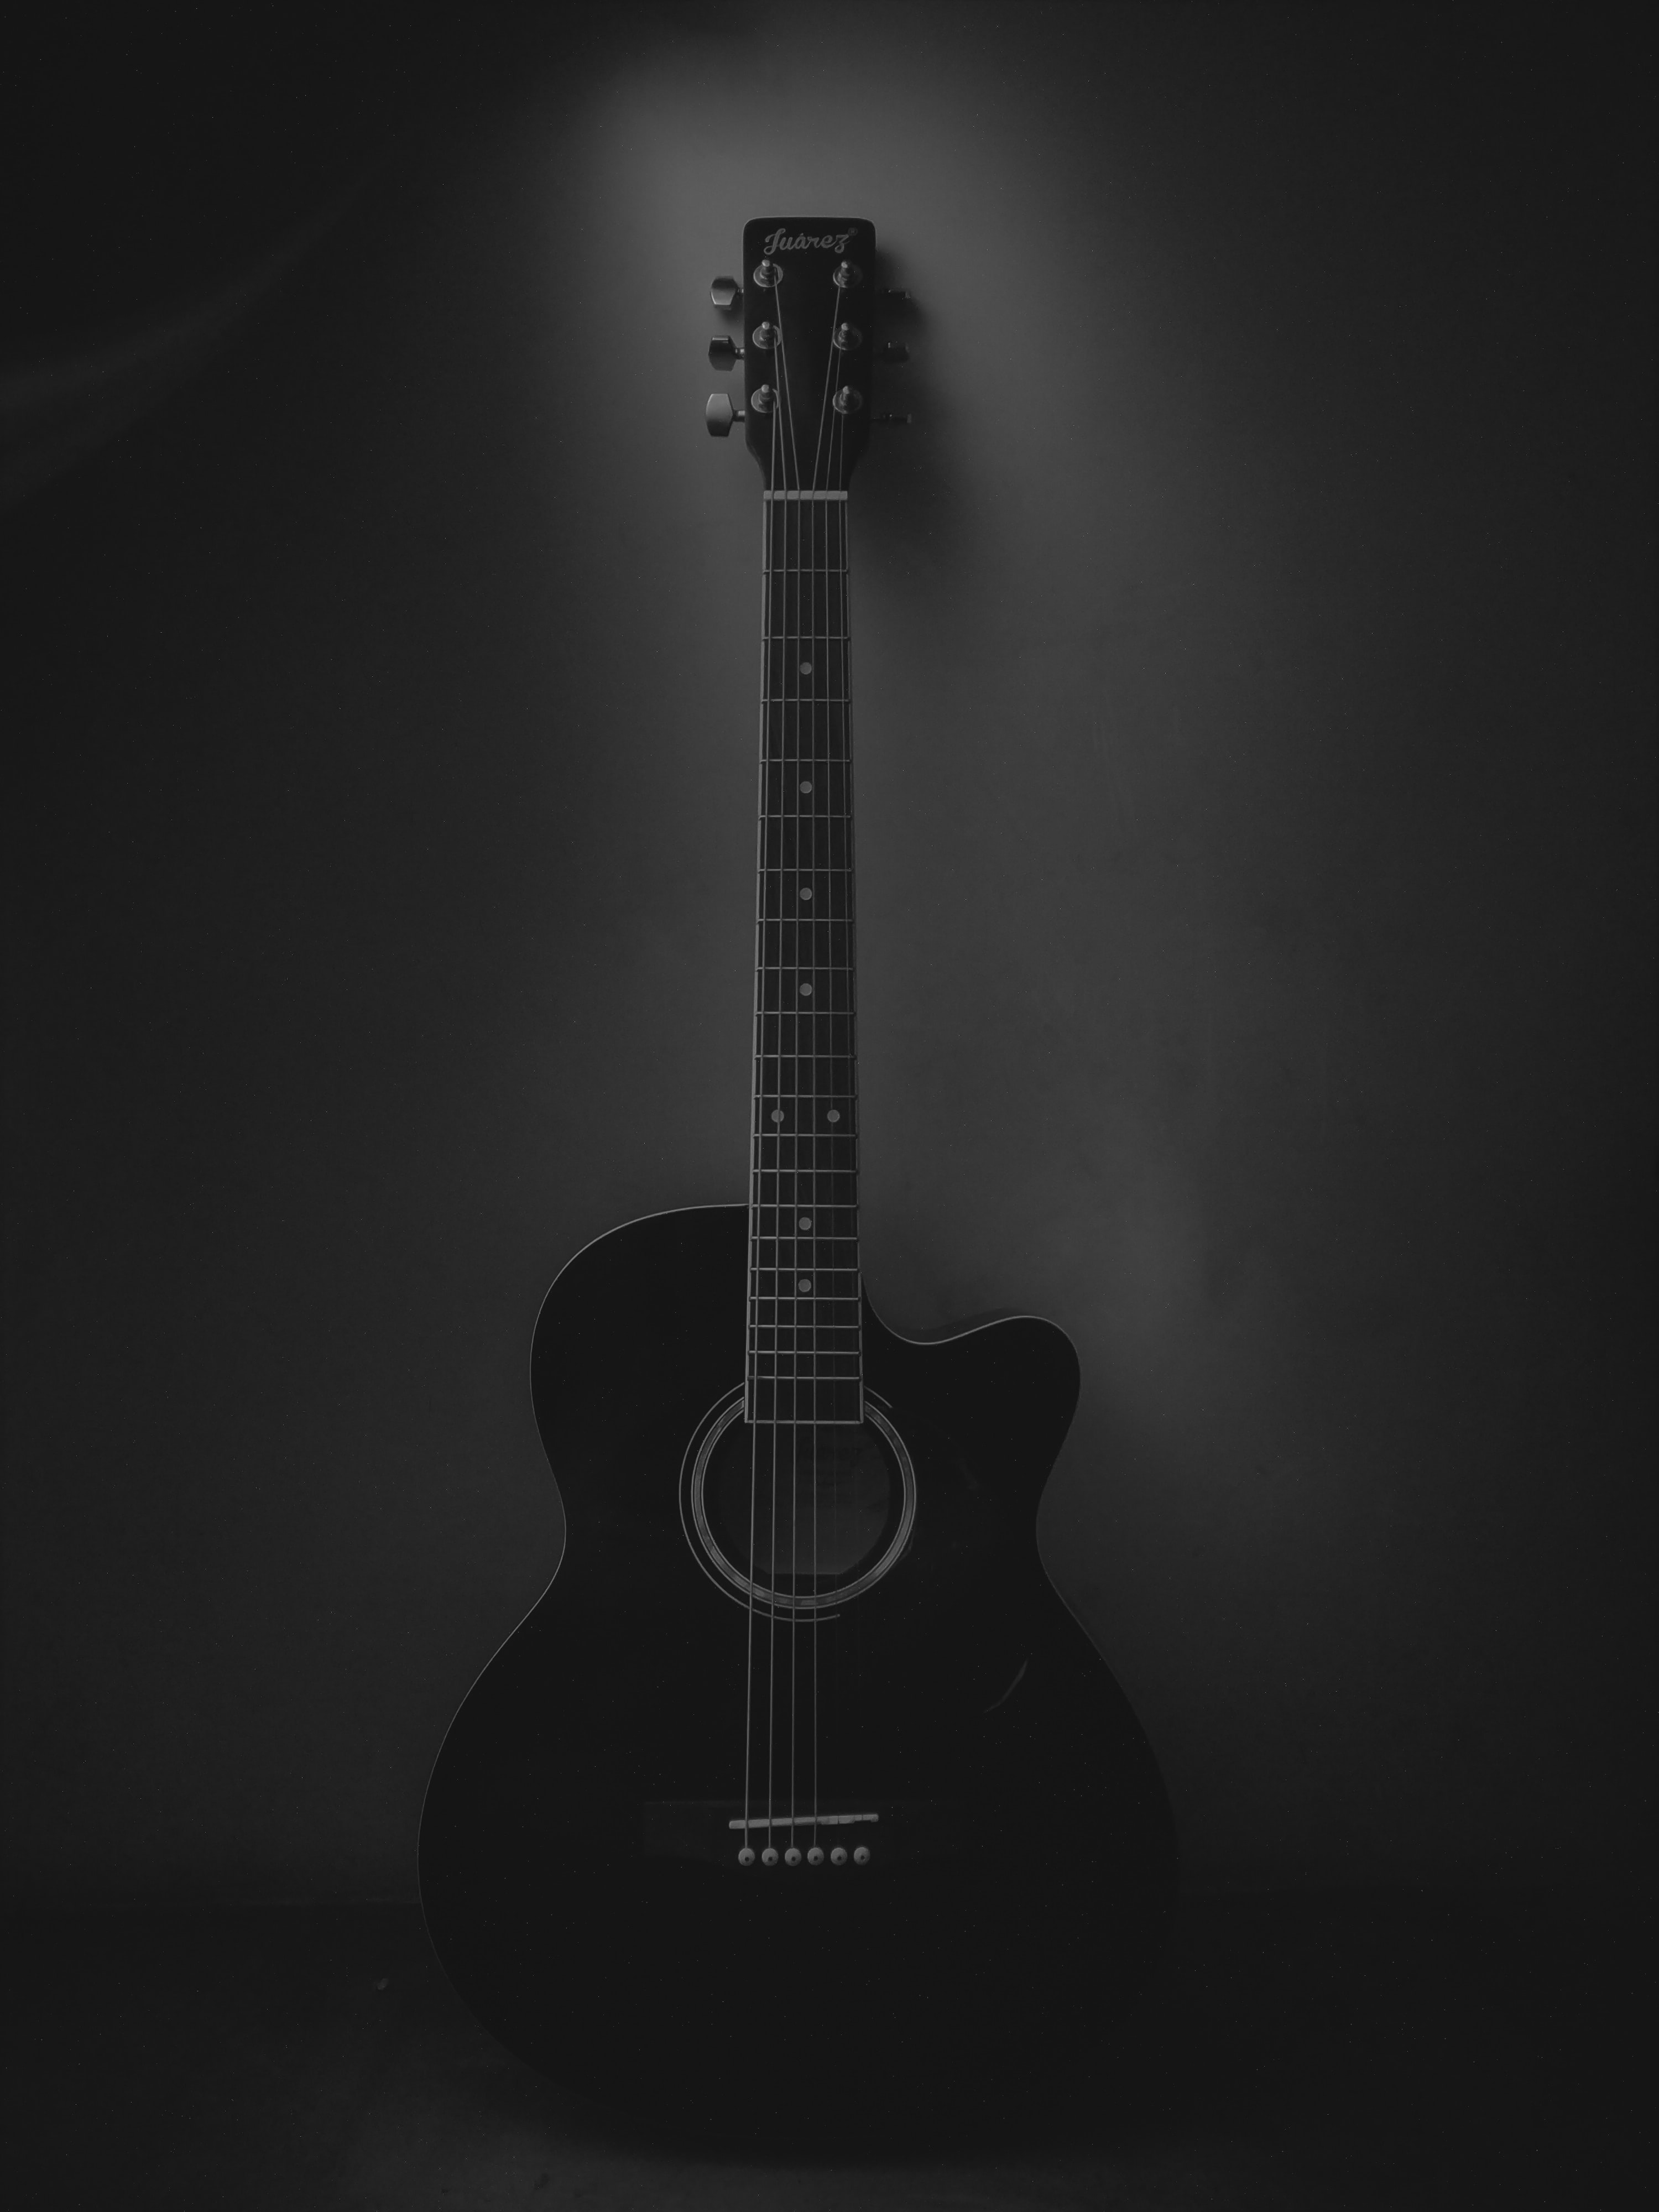 dark, black, guitar, music, acoustic guitar, musical instrument cellphone